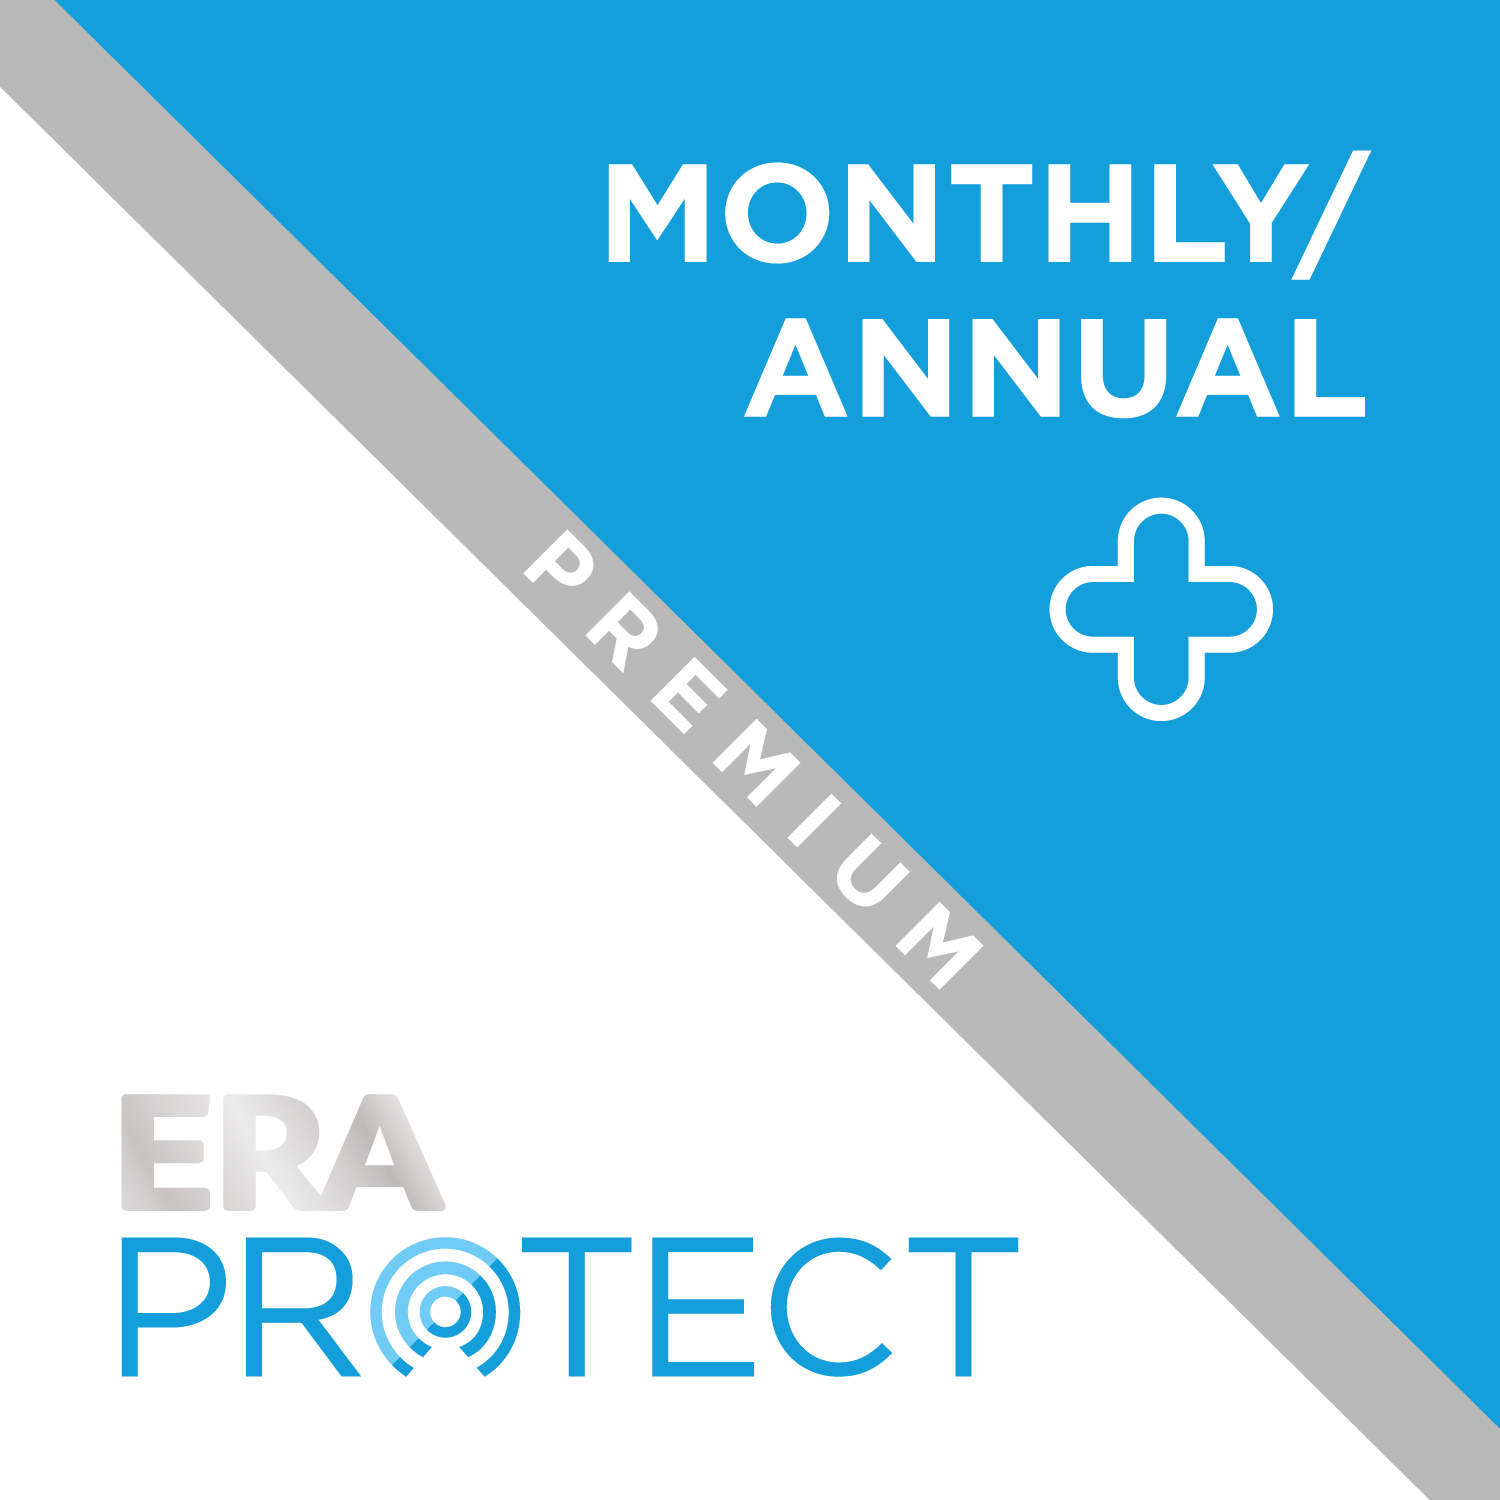 ERA Protect Monthly